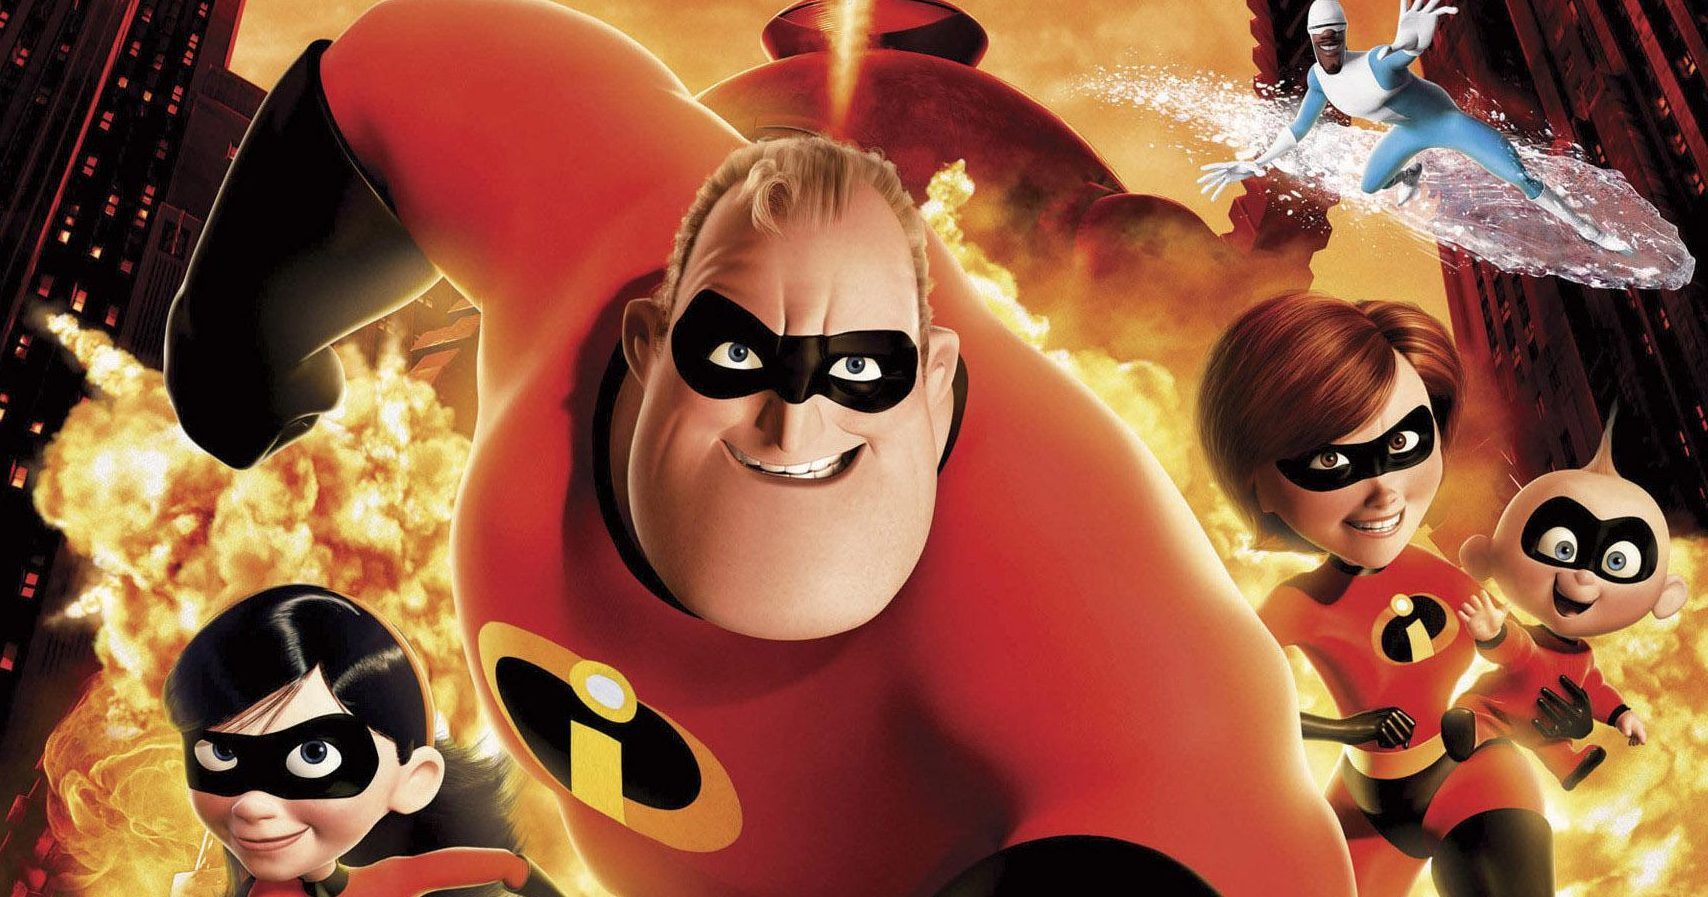 Disney: 10 Things That Don't Make Sense About The Incredibles